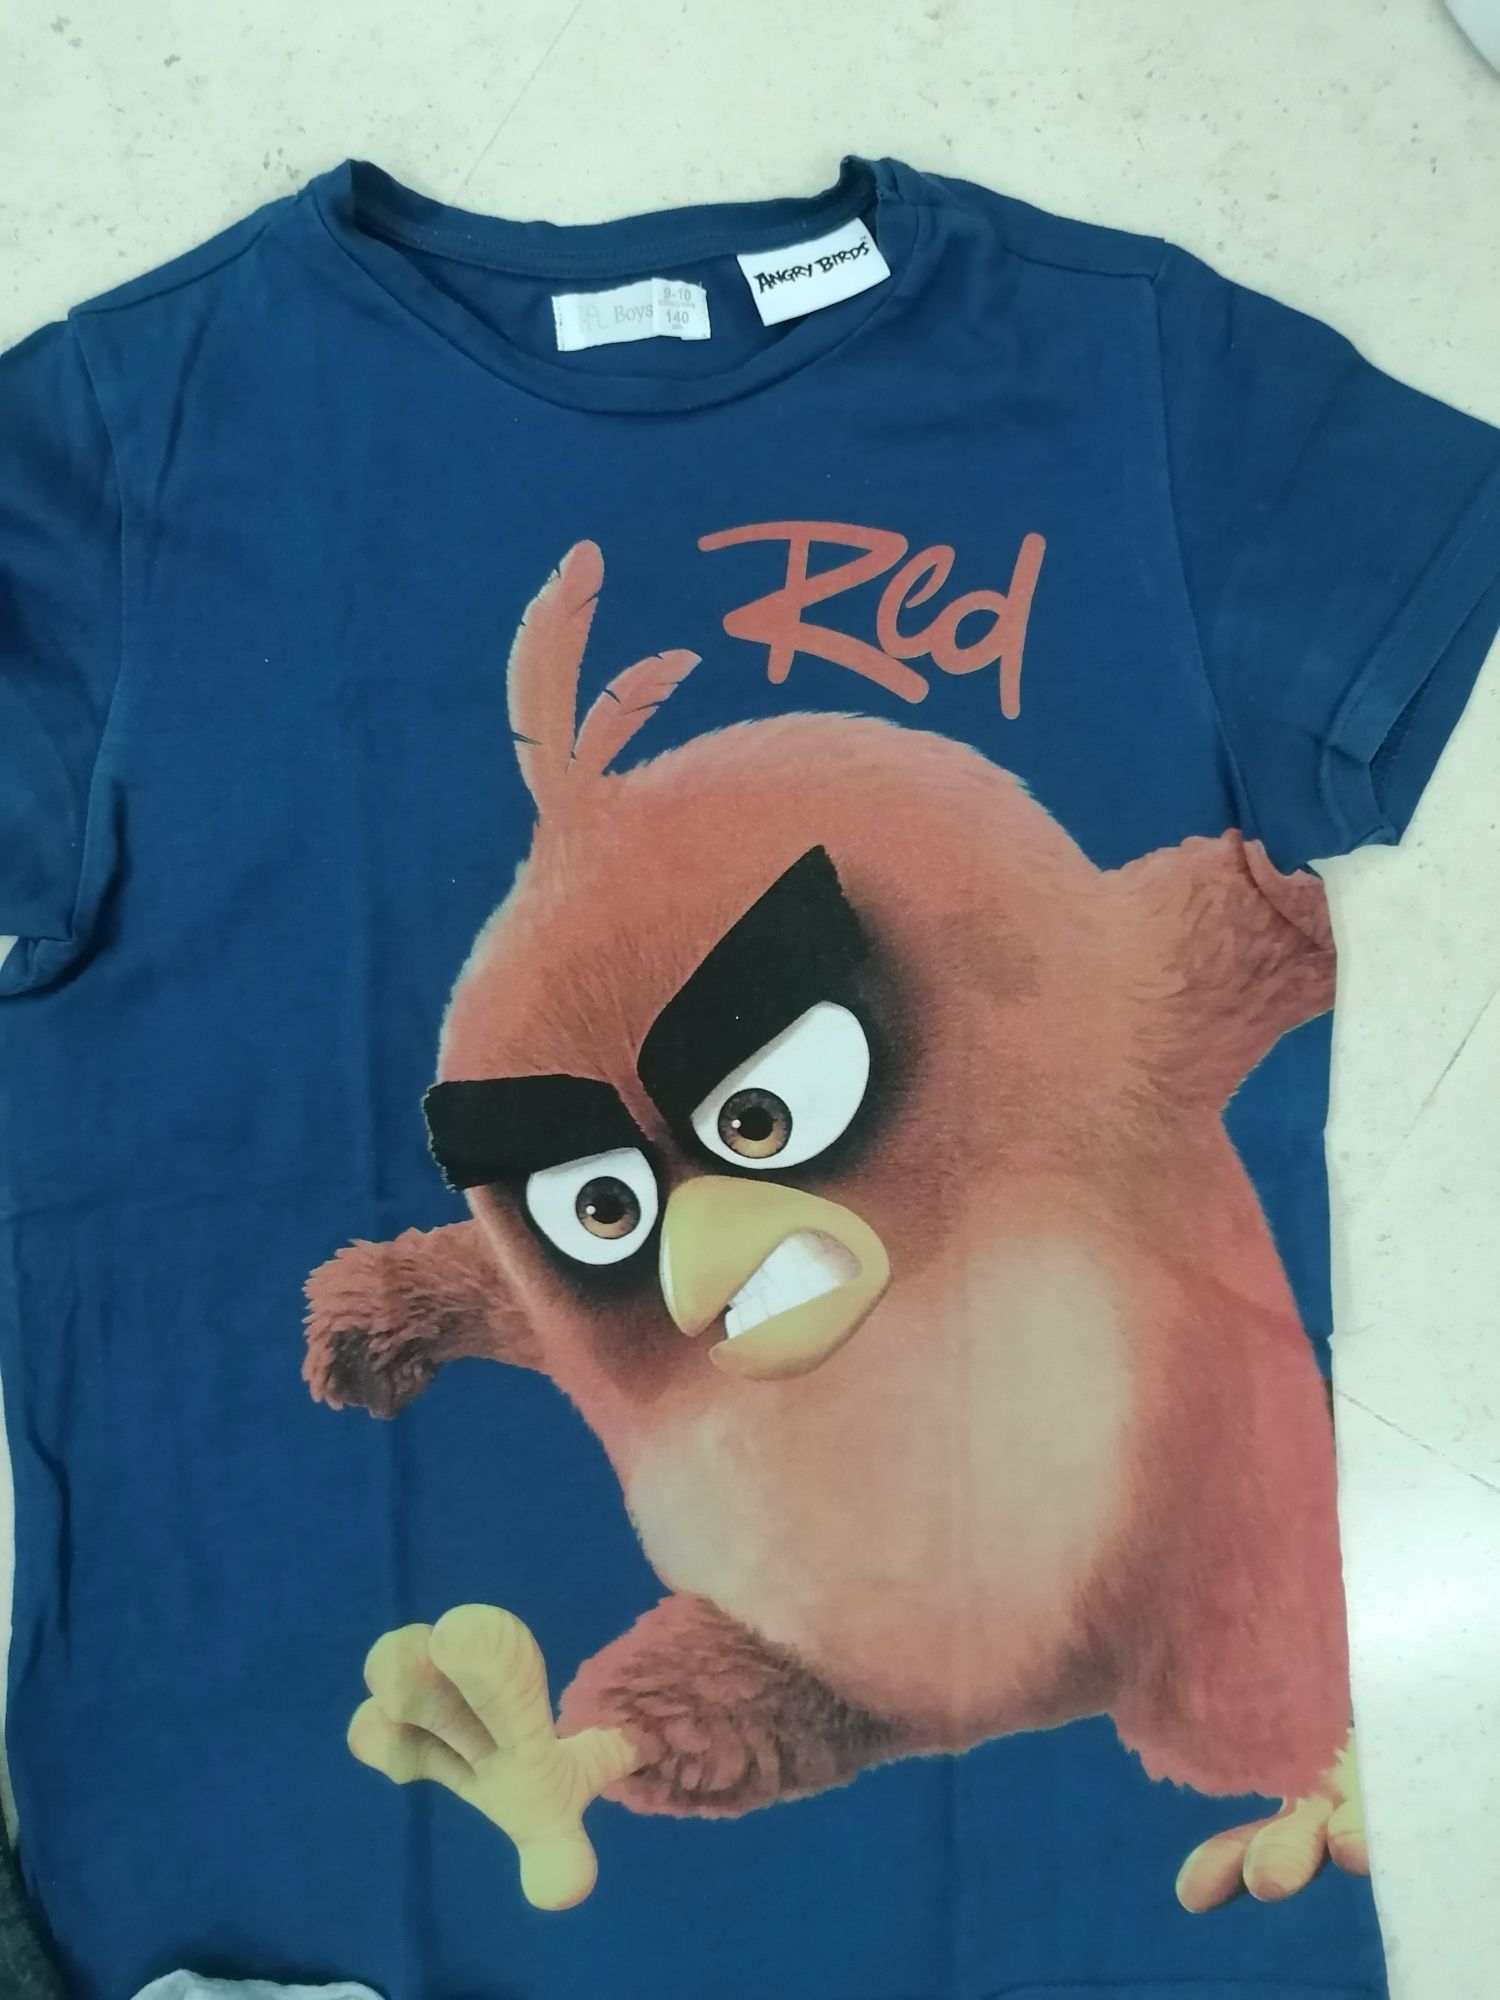 T-shirts Star Wars, Iron Man (Marvel) e Angry Birds 9-10 anos